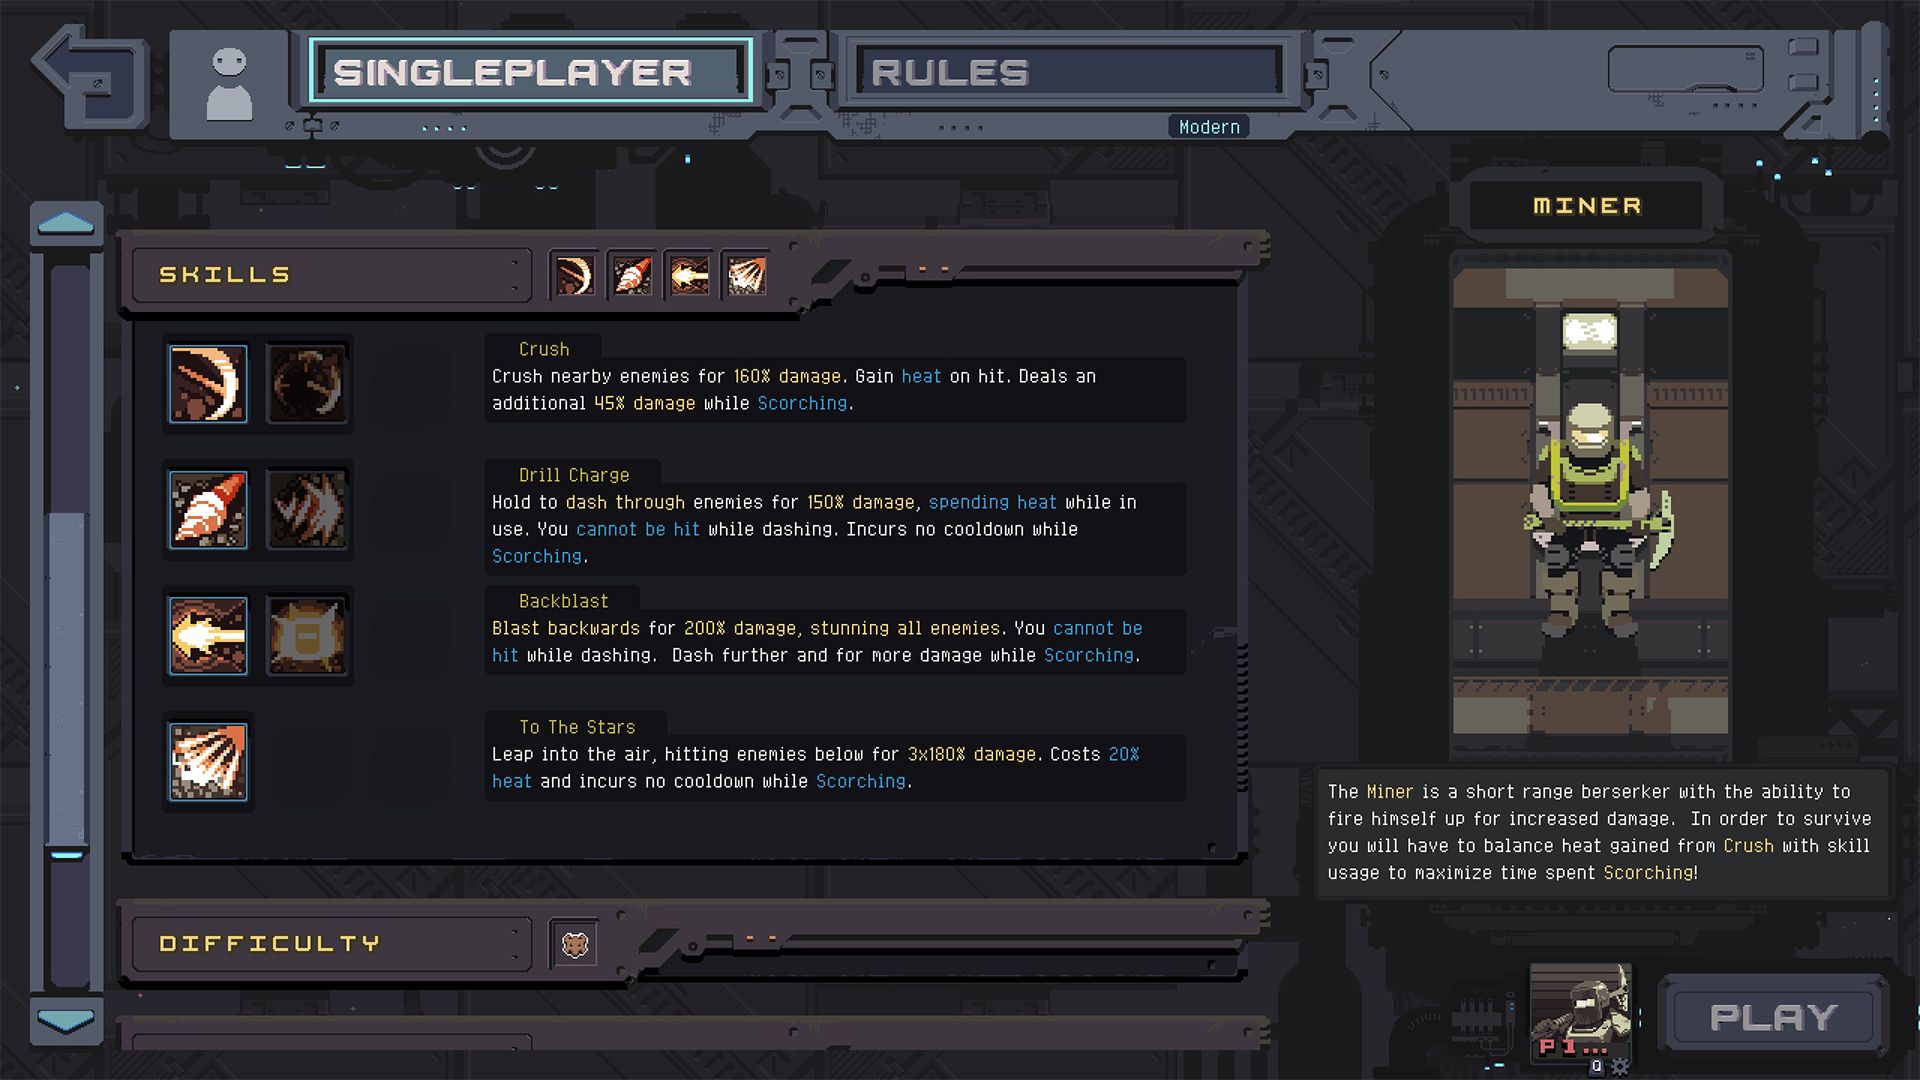 miner skill descriptions on character select menu